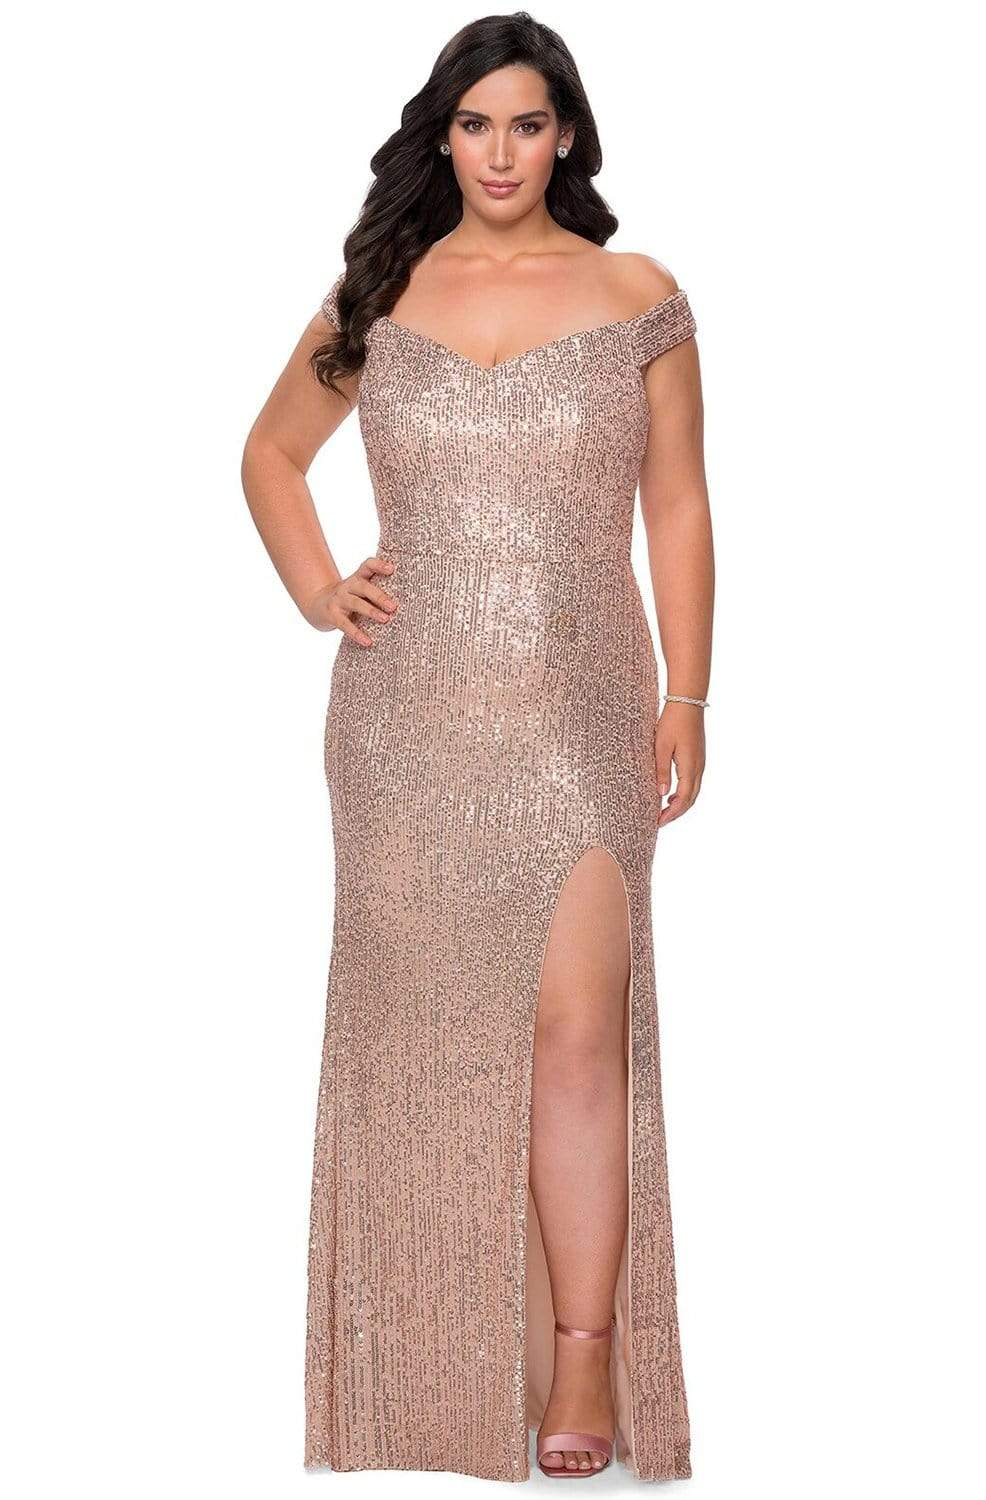 La Femme - 29023 Sequined High Slit Sheath Evening Gown Evening Dresses 12W / Rose Gold